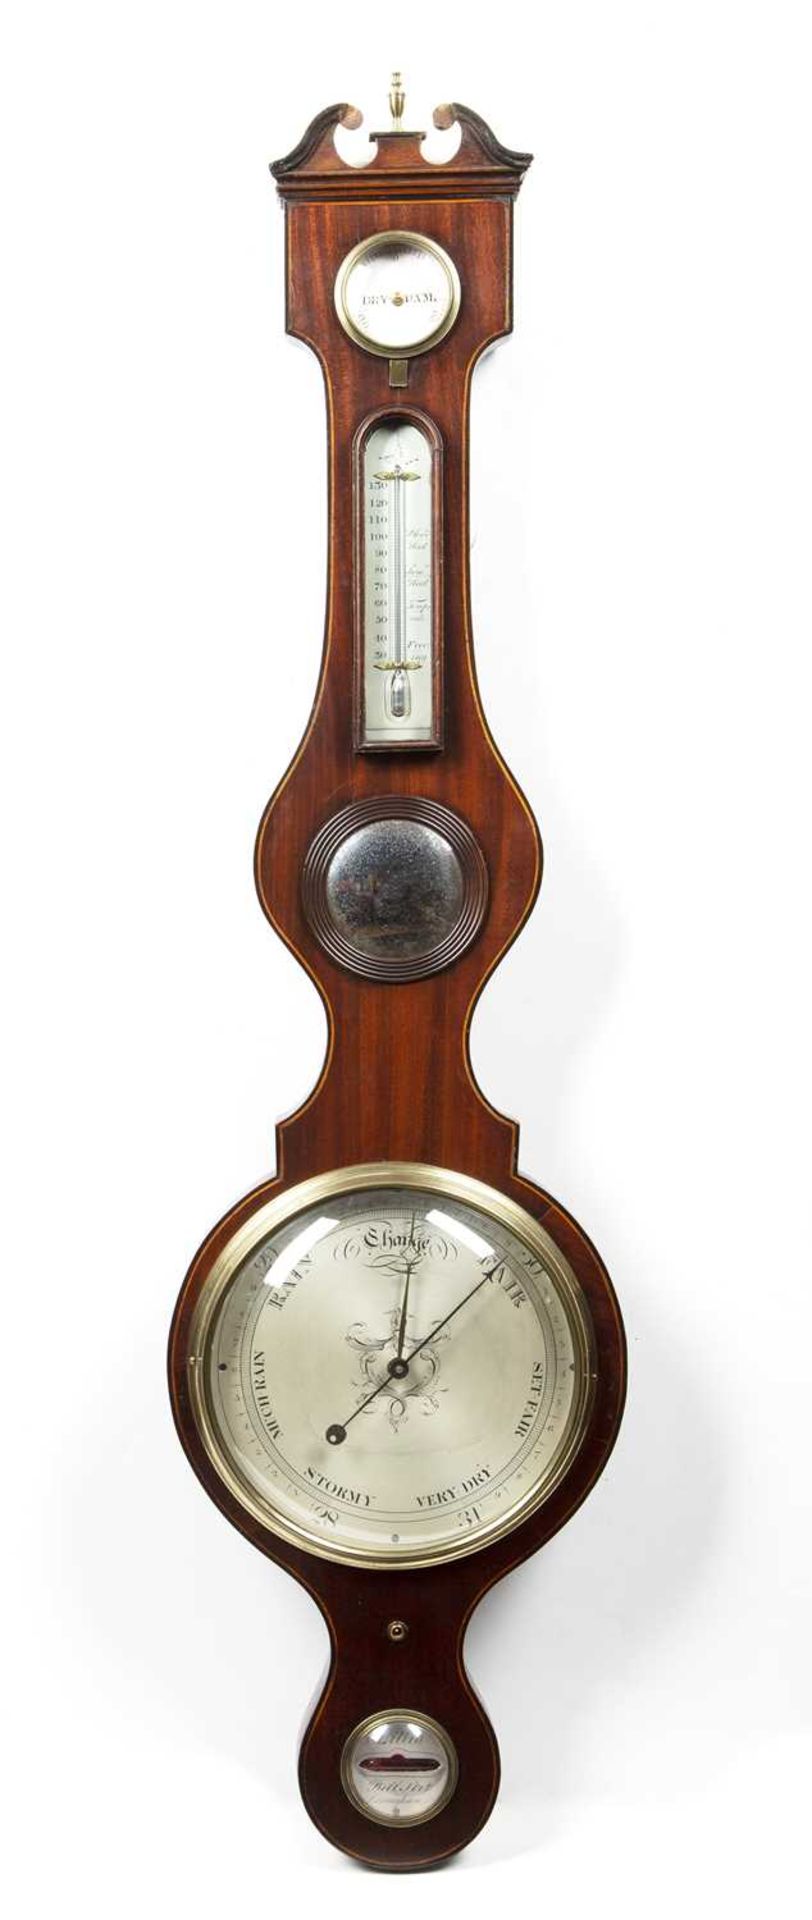 Mahogany barometer 19th Century, with silvered dials, marked Lillia, Bell Street, Birmingham,